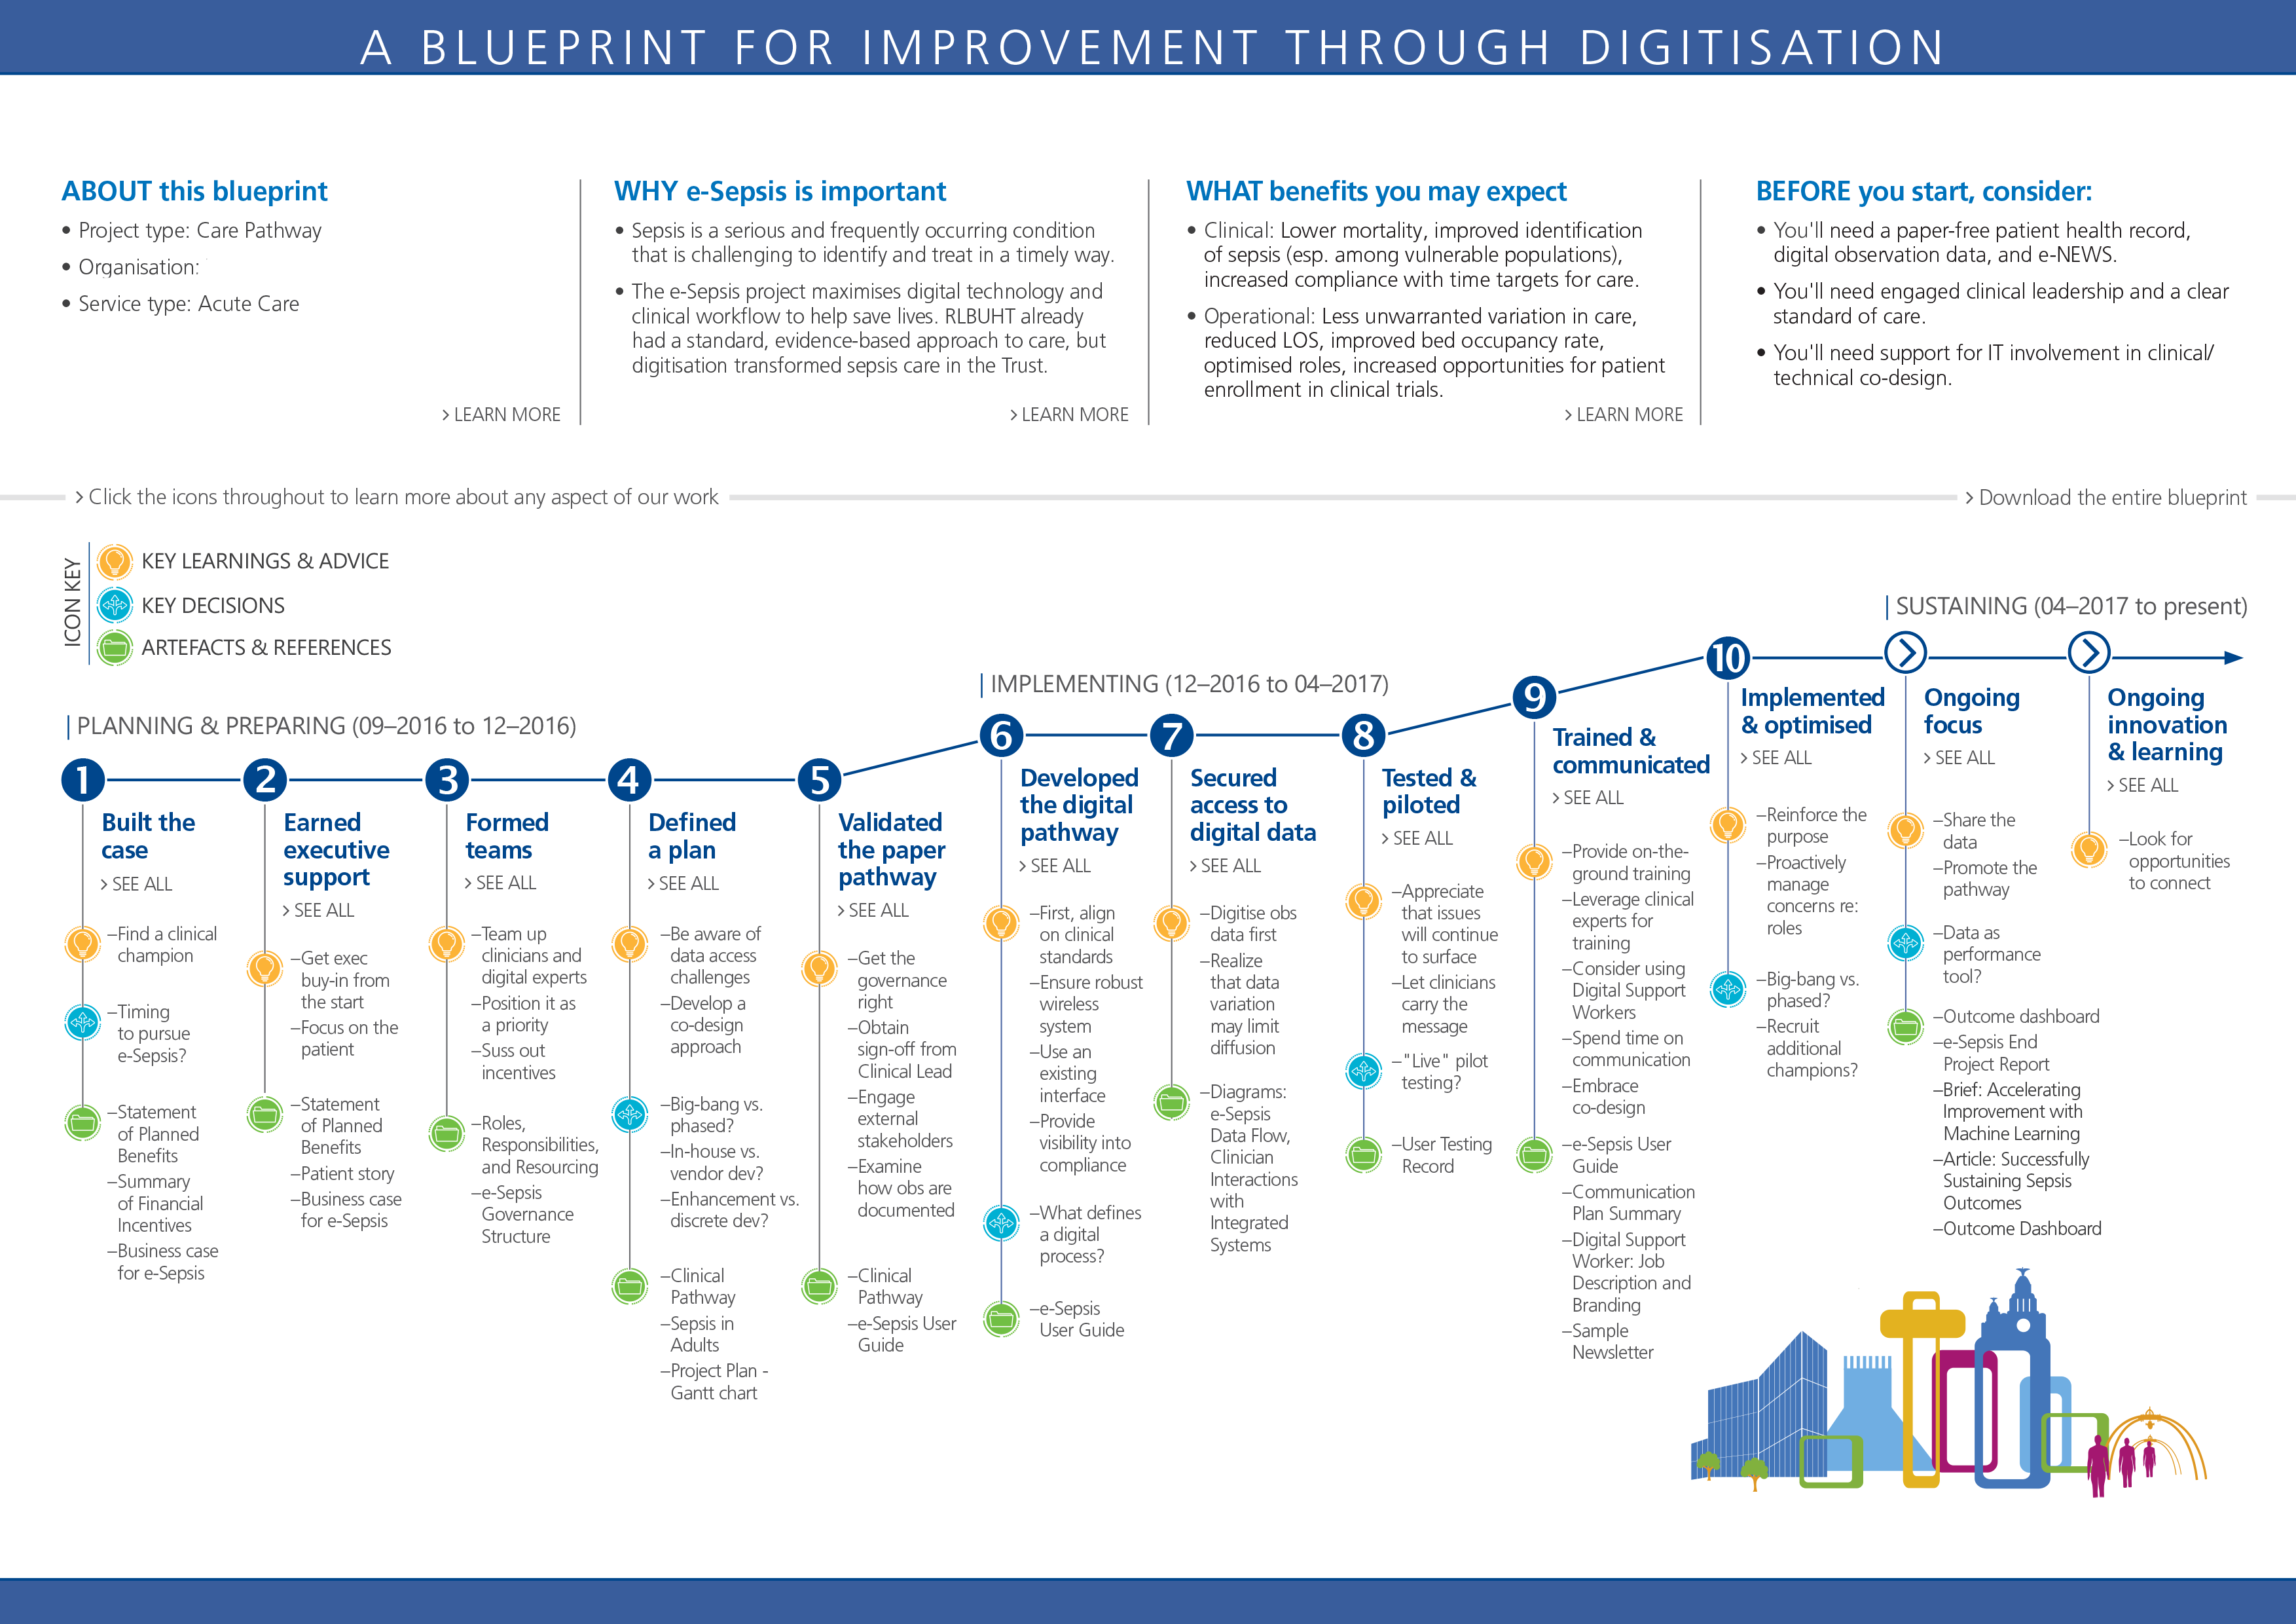 A sample blueprint recording an organization's experience with improvement through digitization